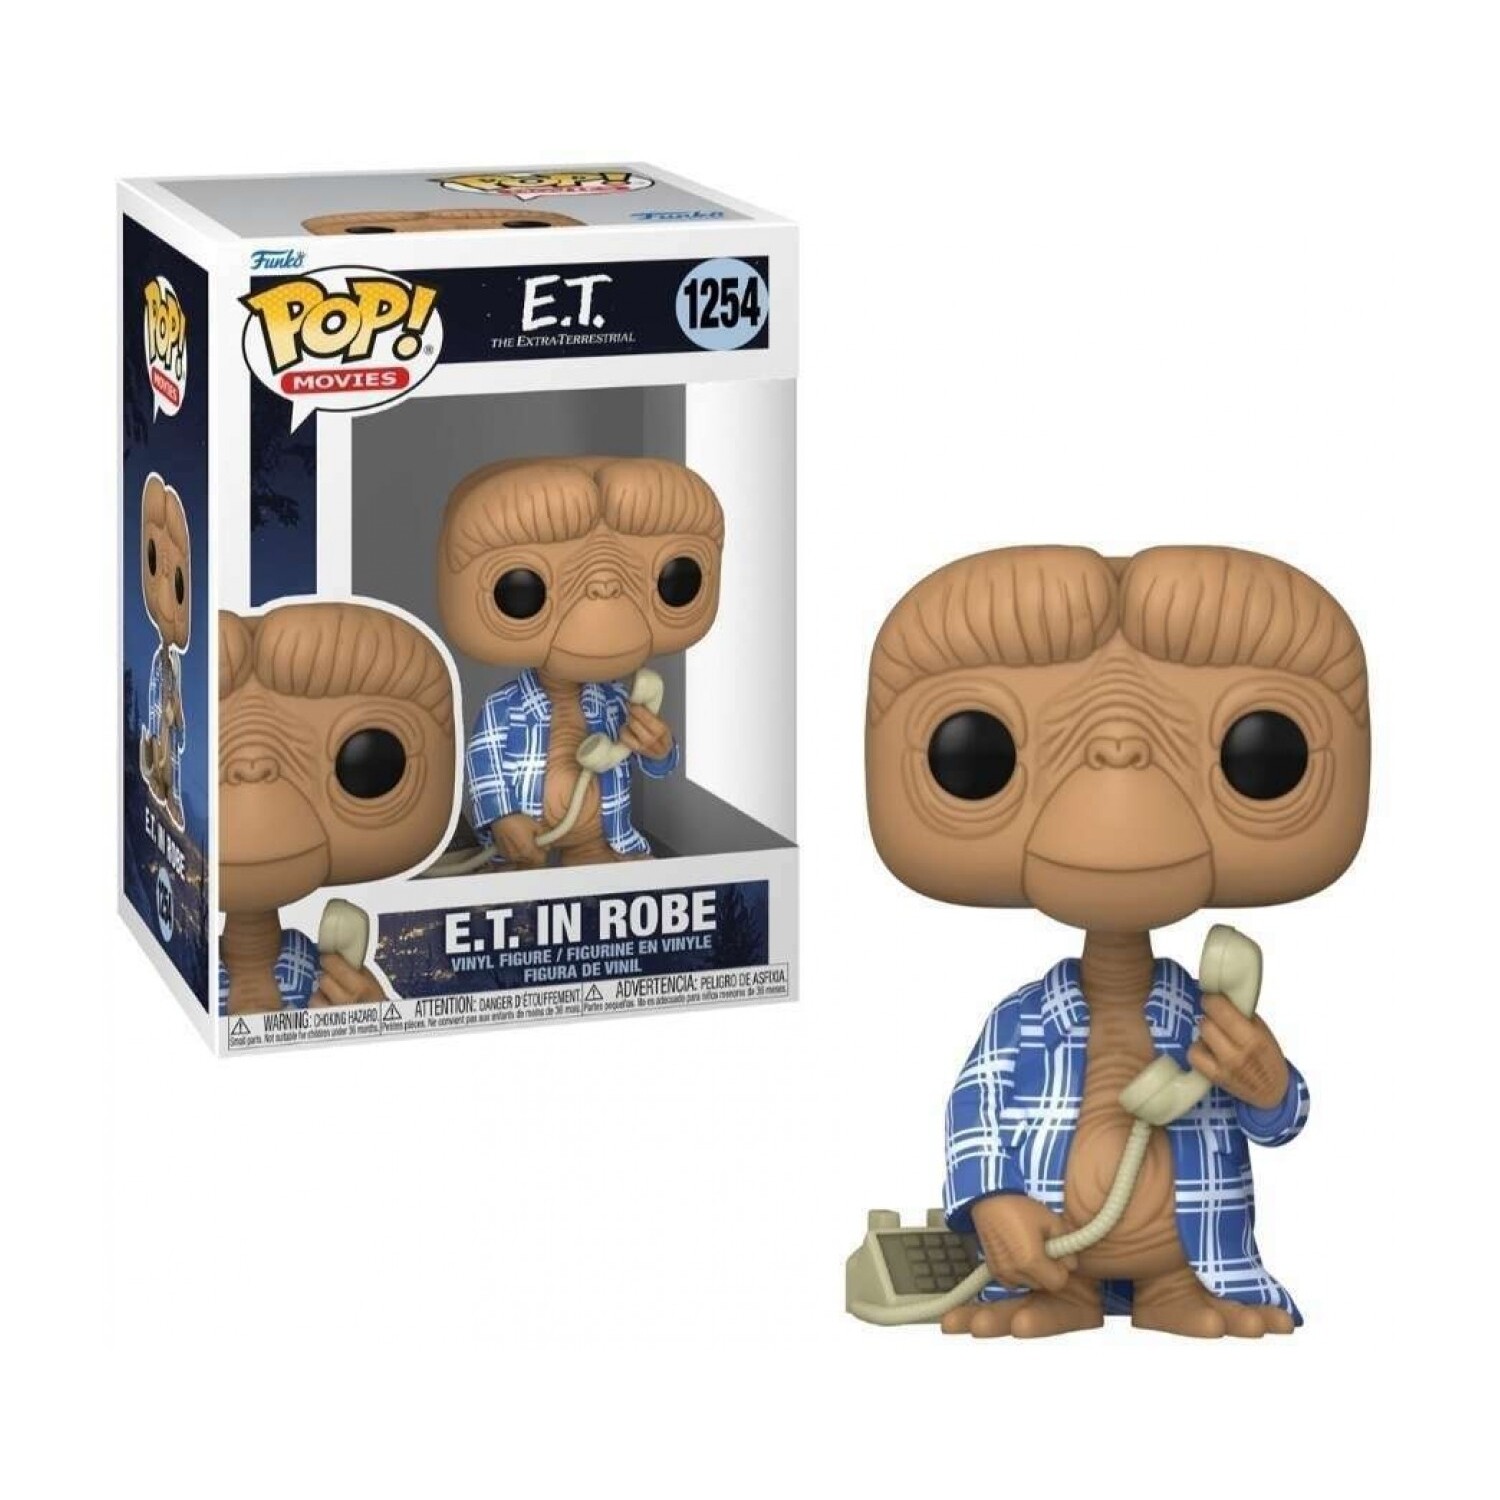 E.T. in Robe  3 3/4"H POP! Vinyl Figure #1254